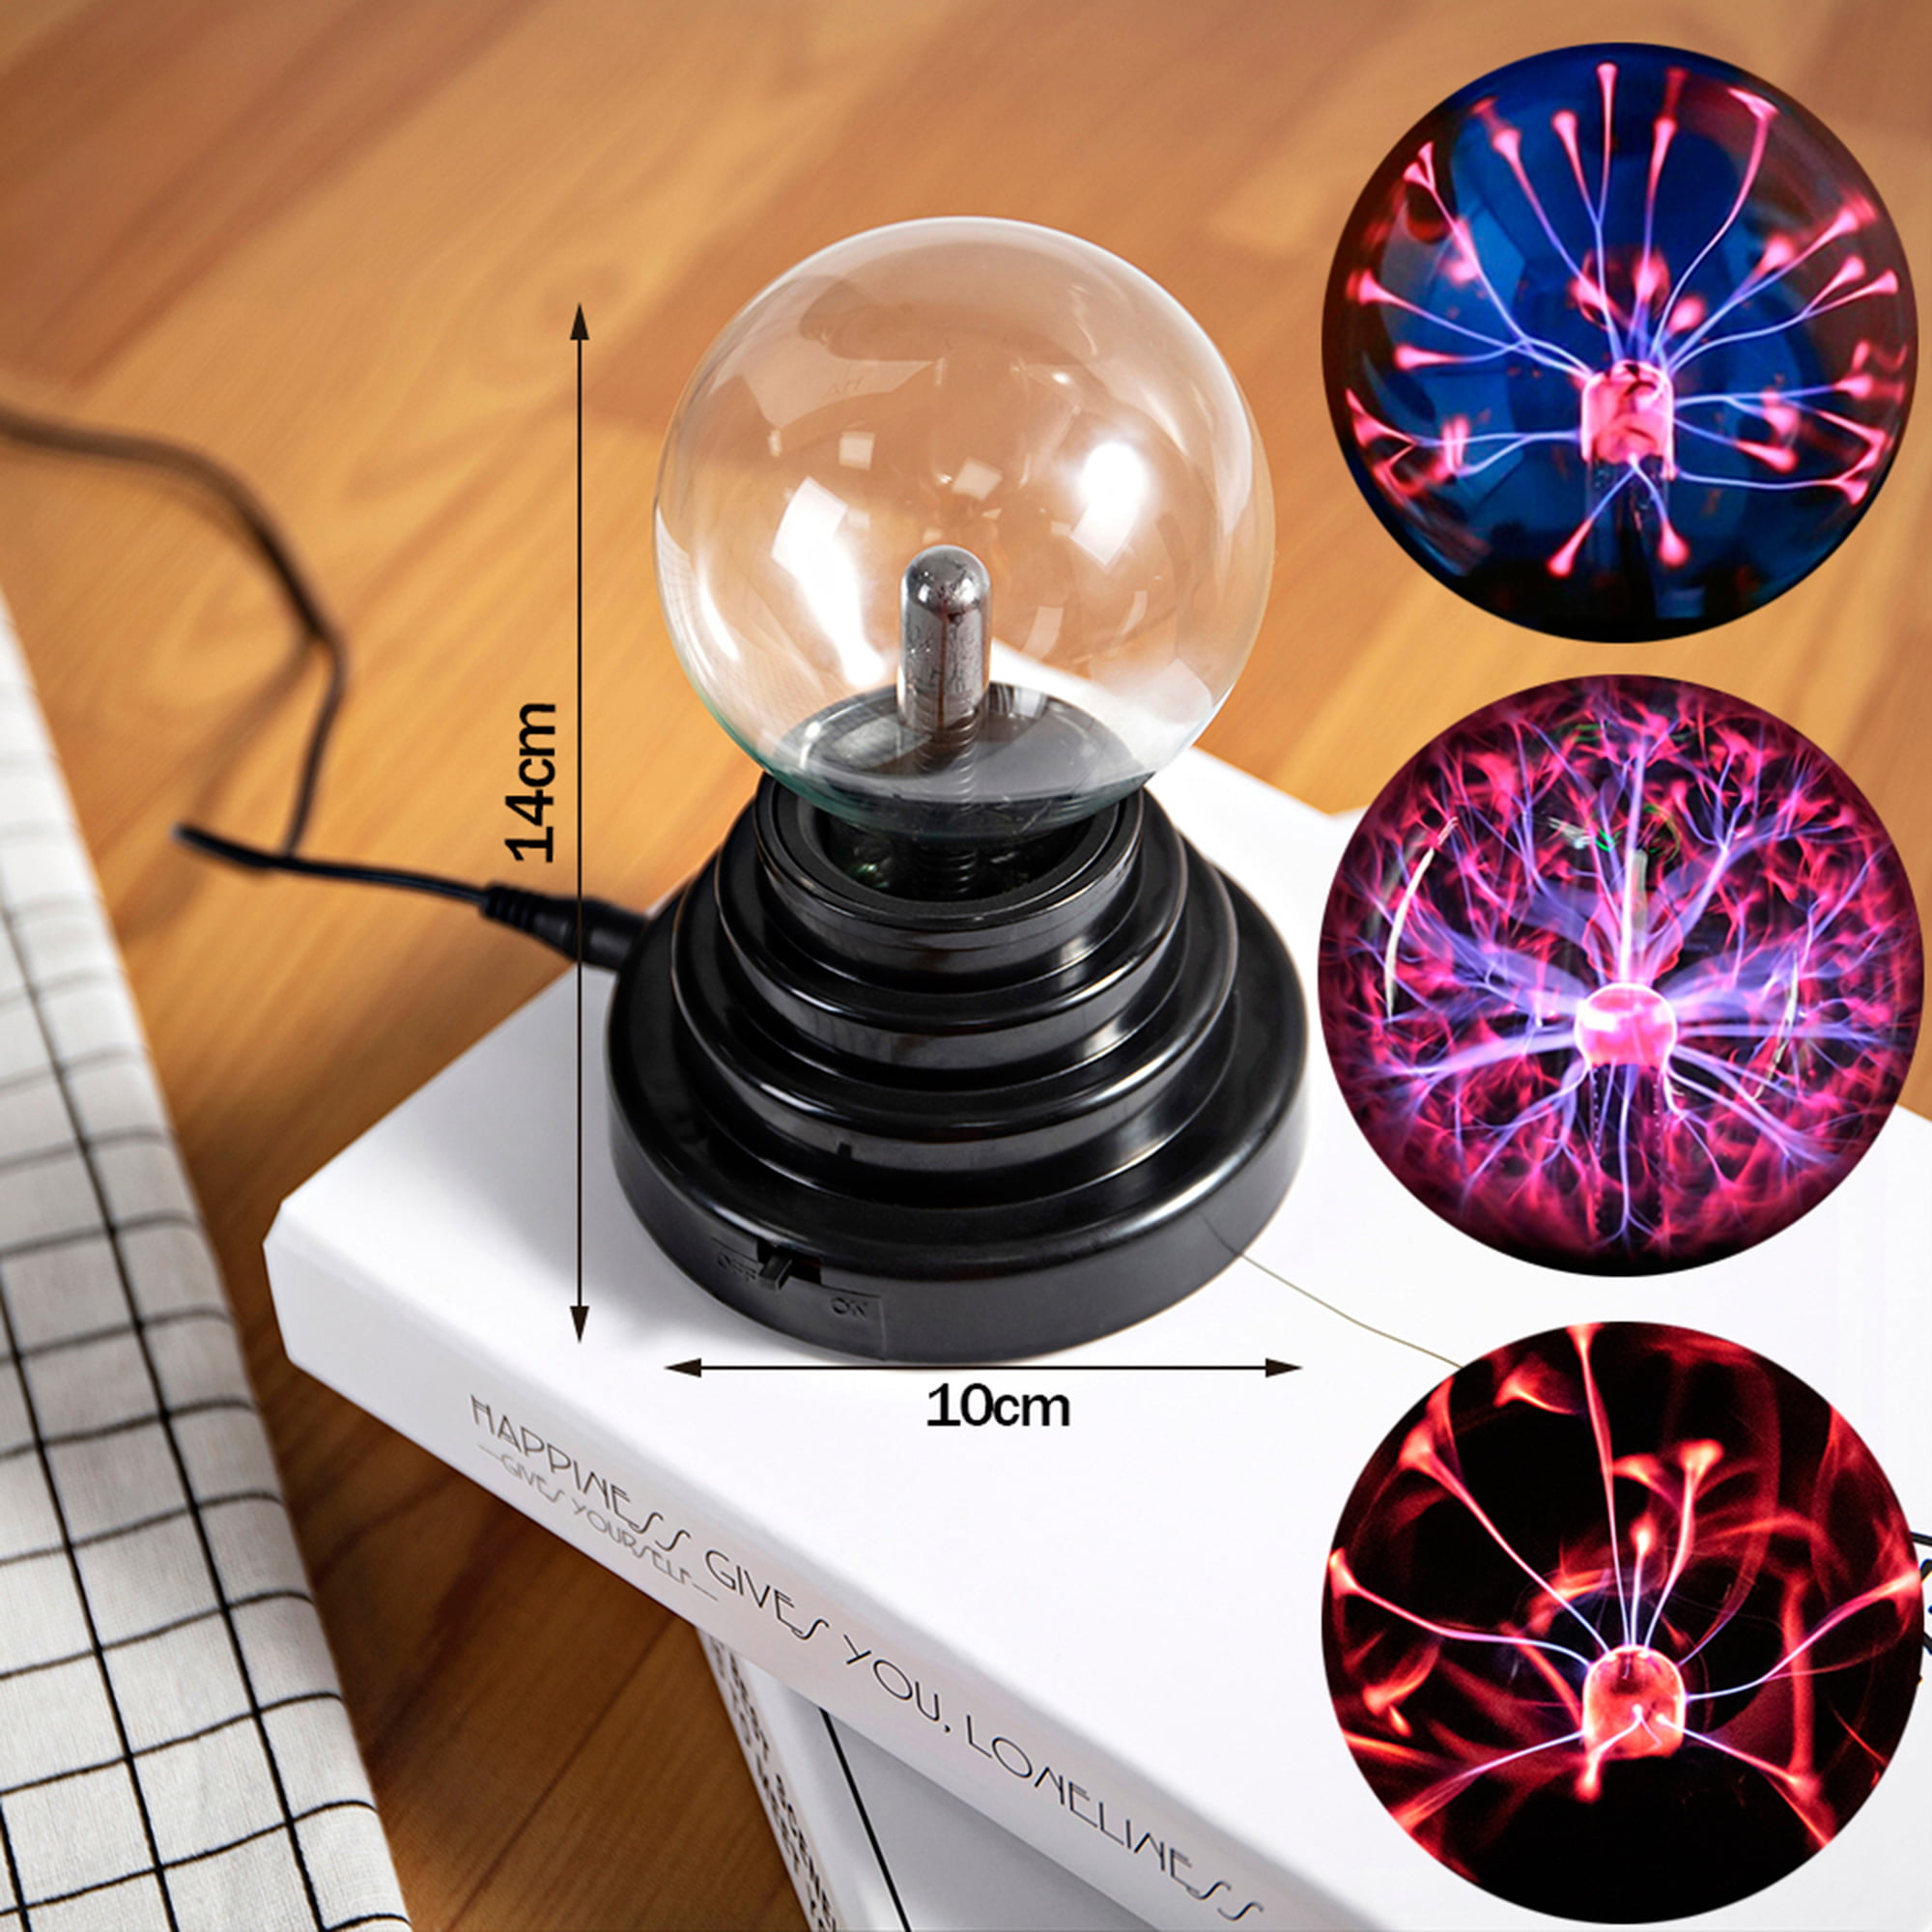 Plasma Ball, Visual Stimulation, Lights